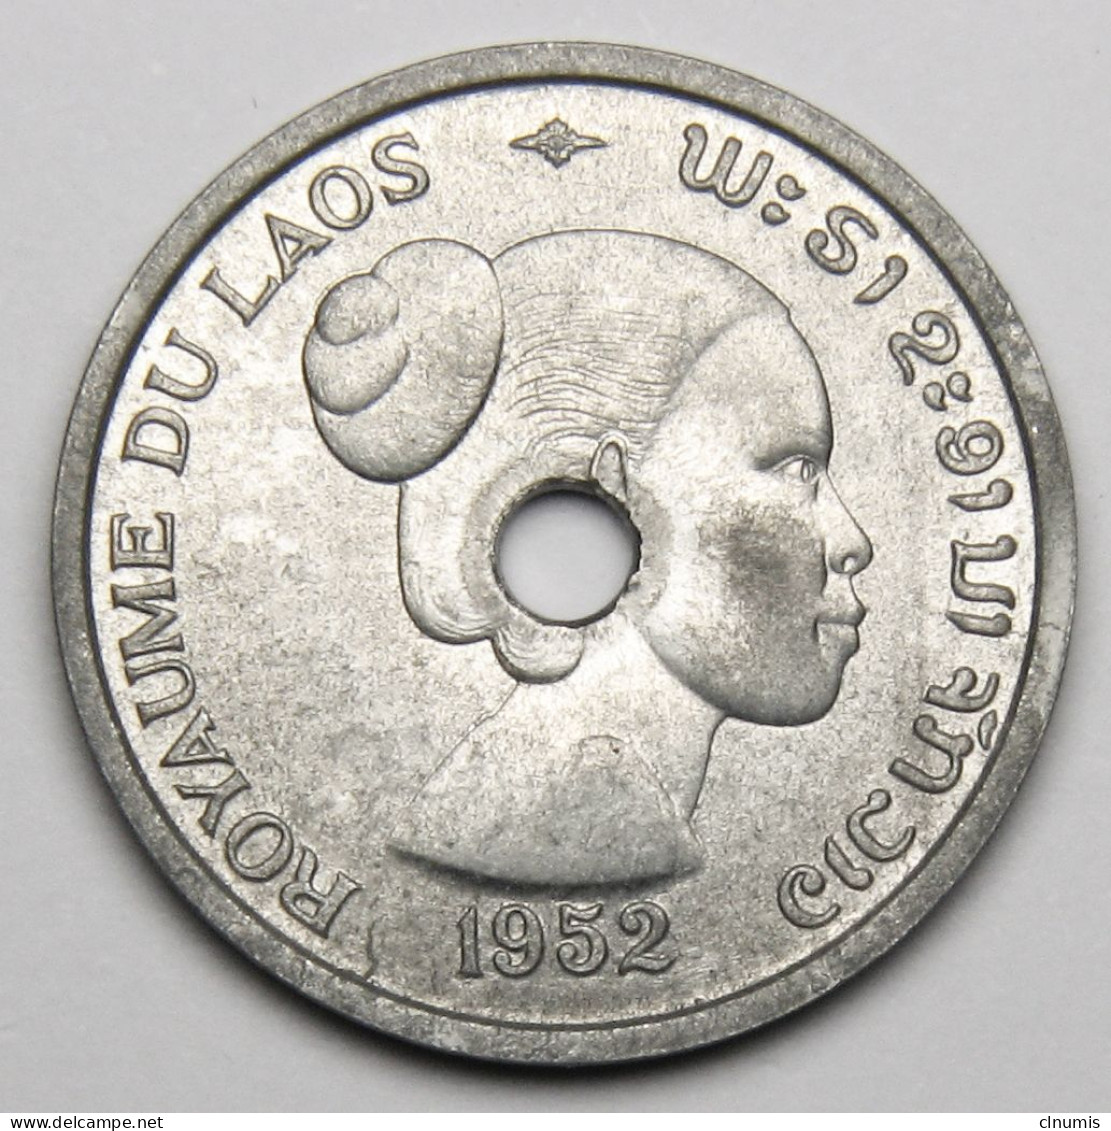 Laos, 10 Cents 1952 - Laos